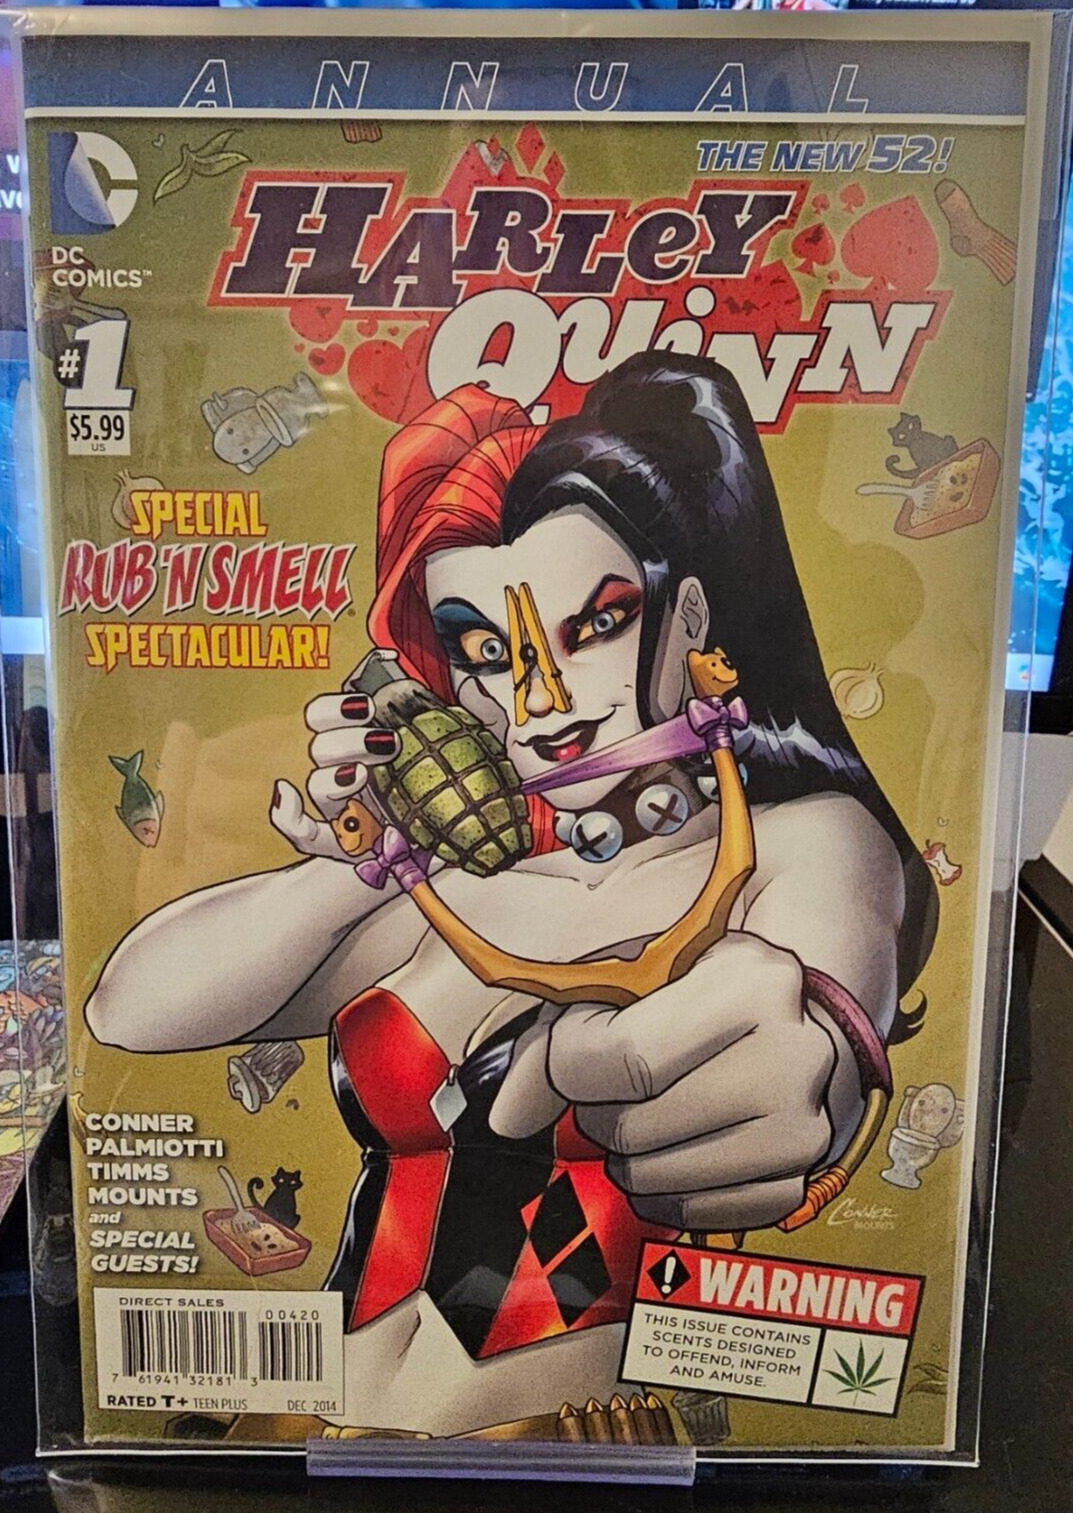 Harley Quinn Annual #1 Rub \'N Smell Spectacular (December 2014, DC)